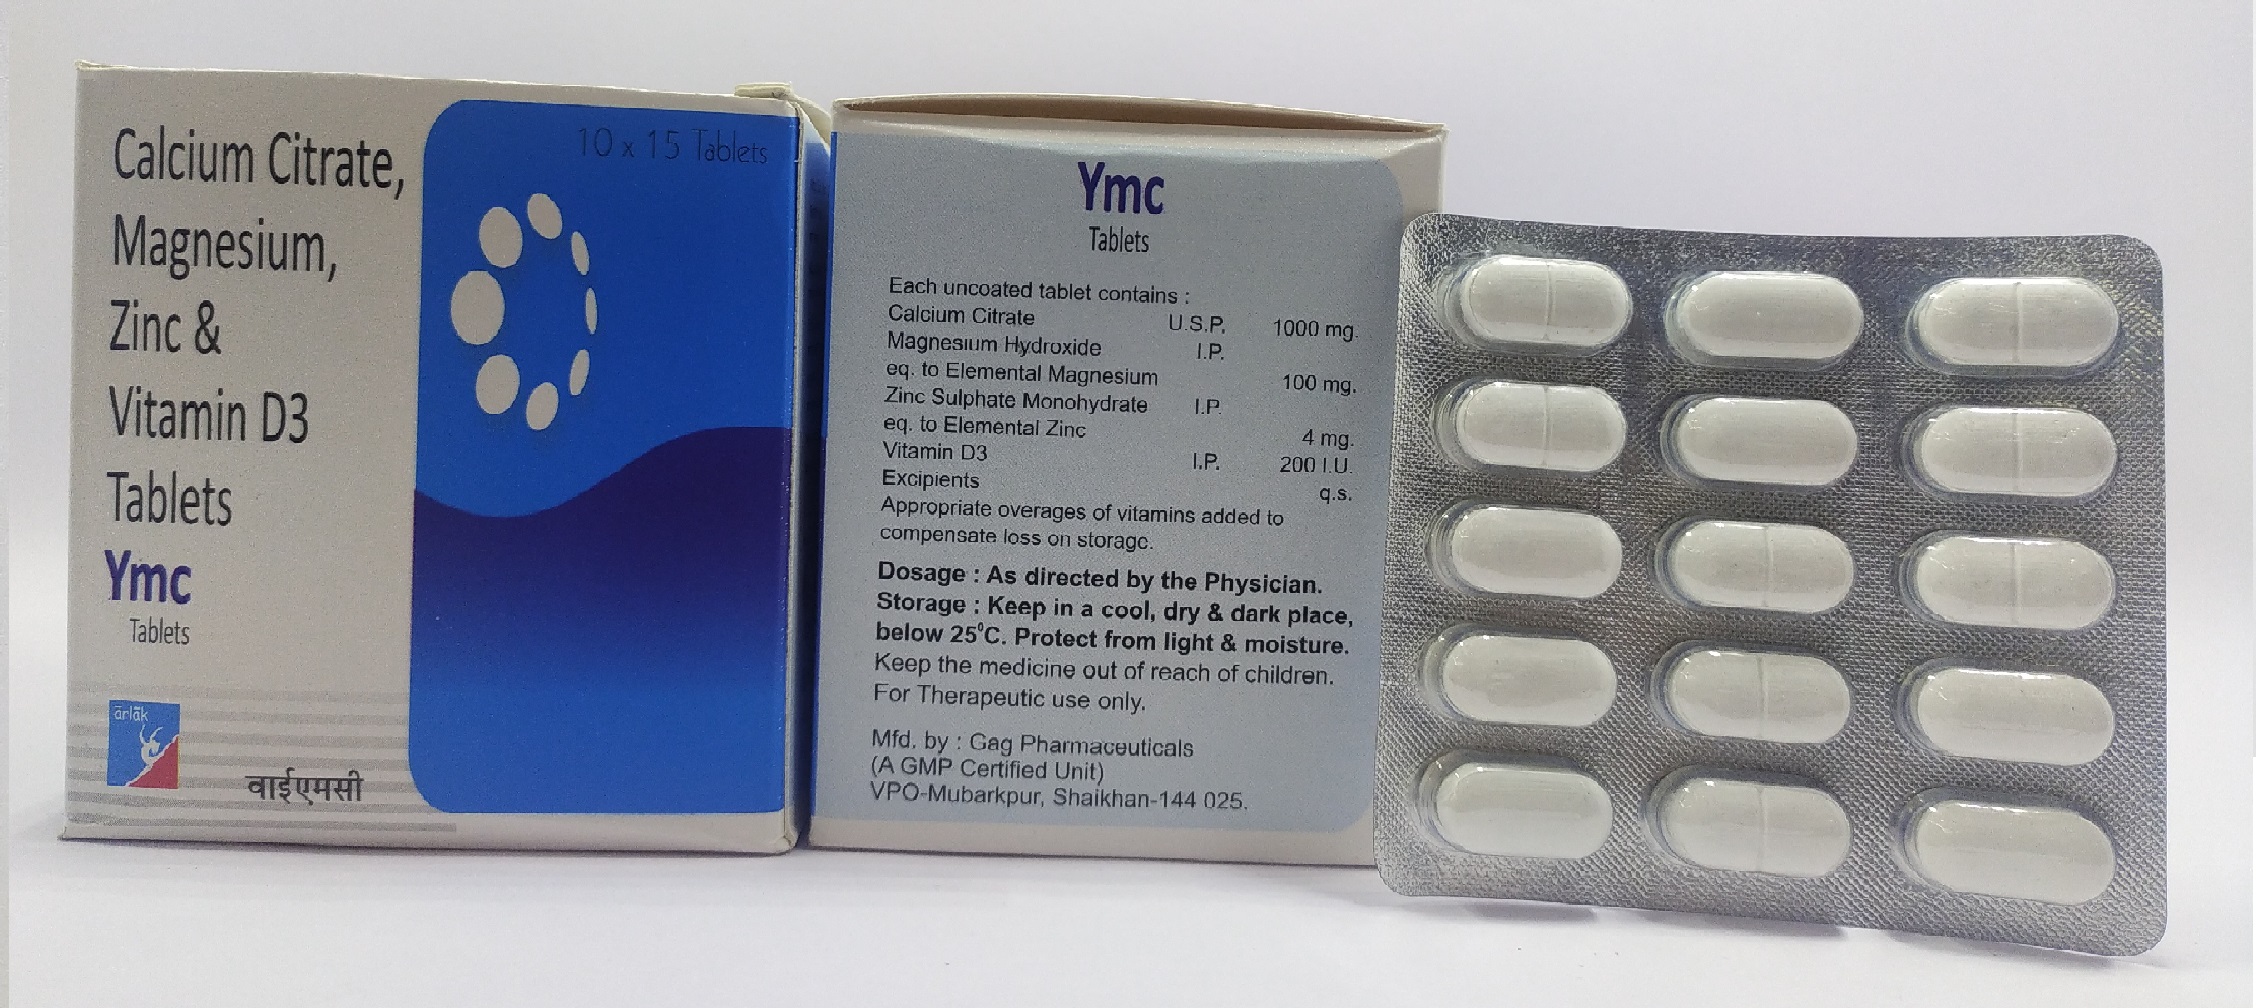 YMC Tablets